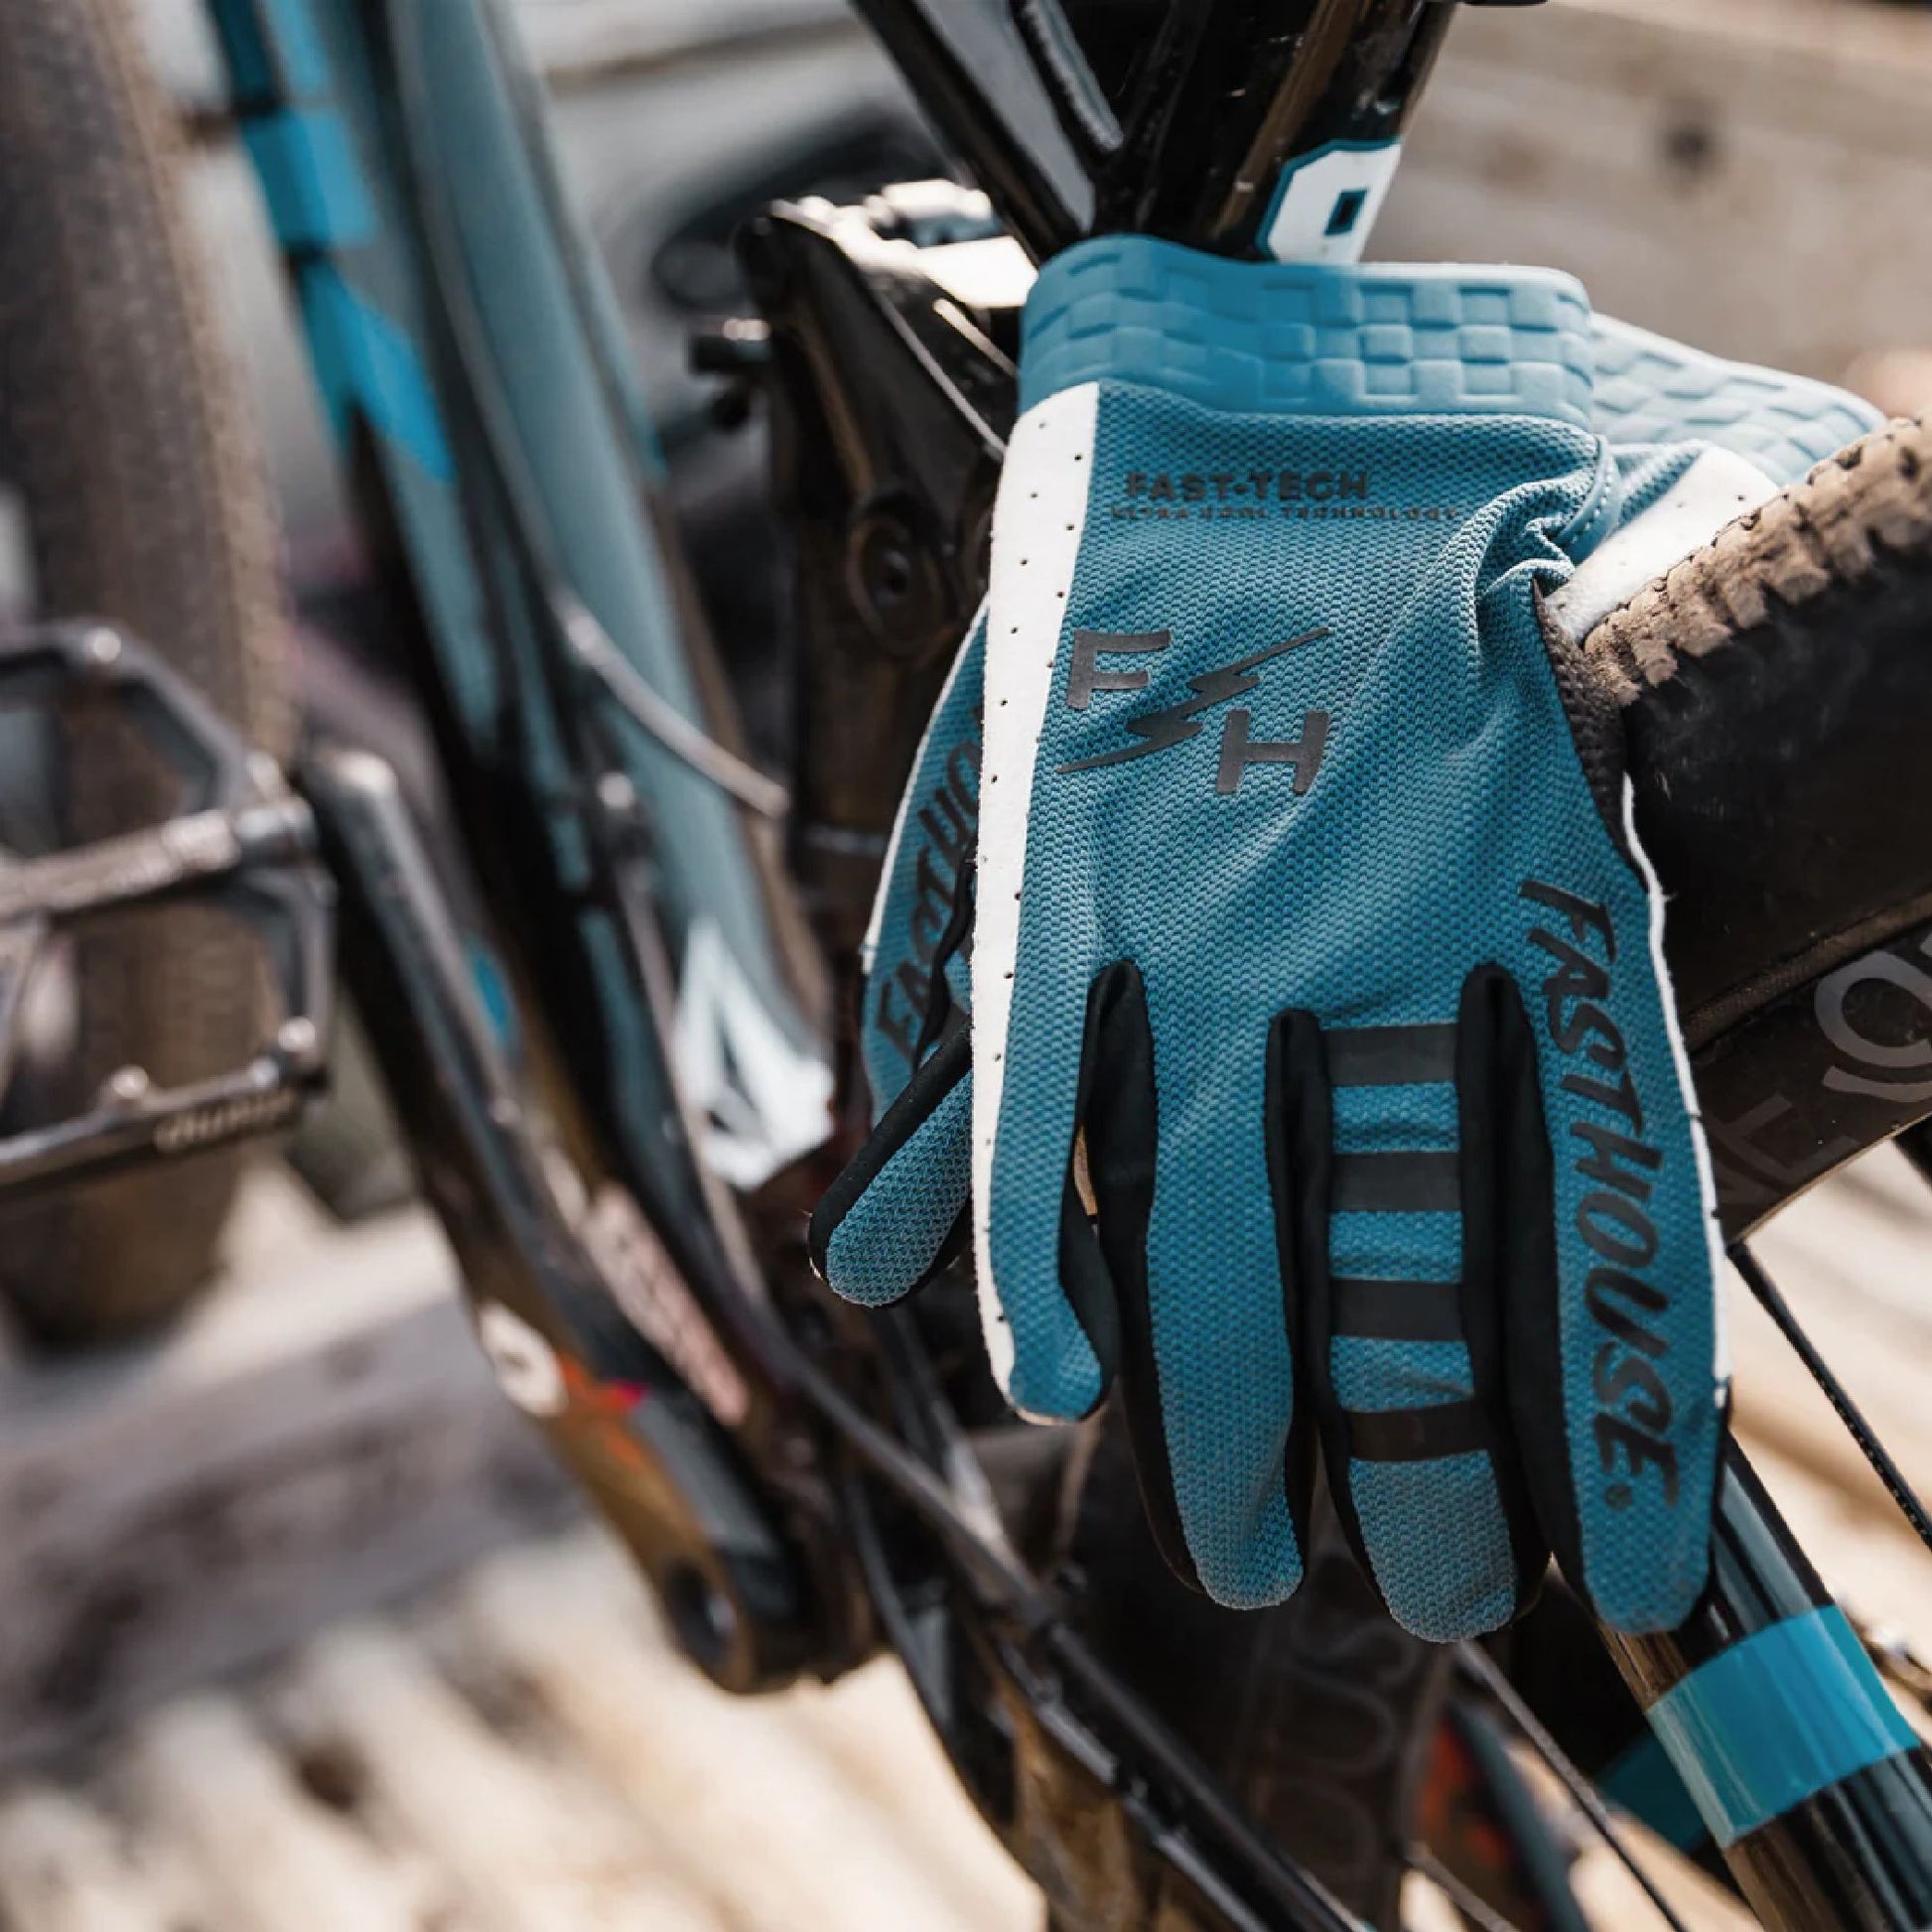 Fasthouse Vapor Glove Indigo Bike Gloves